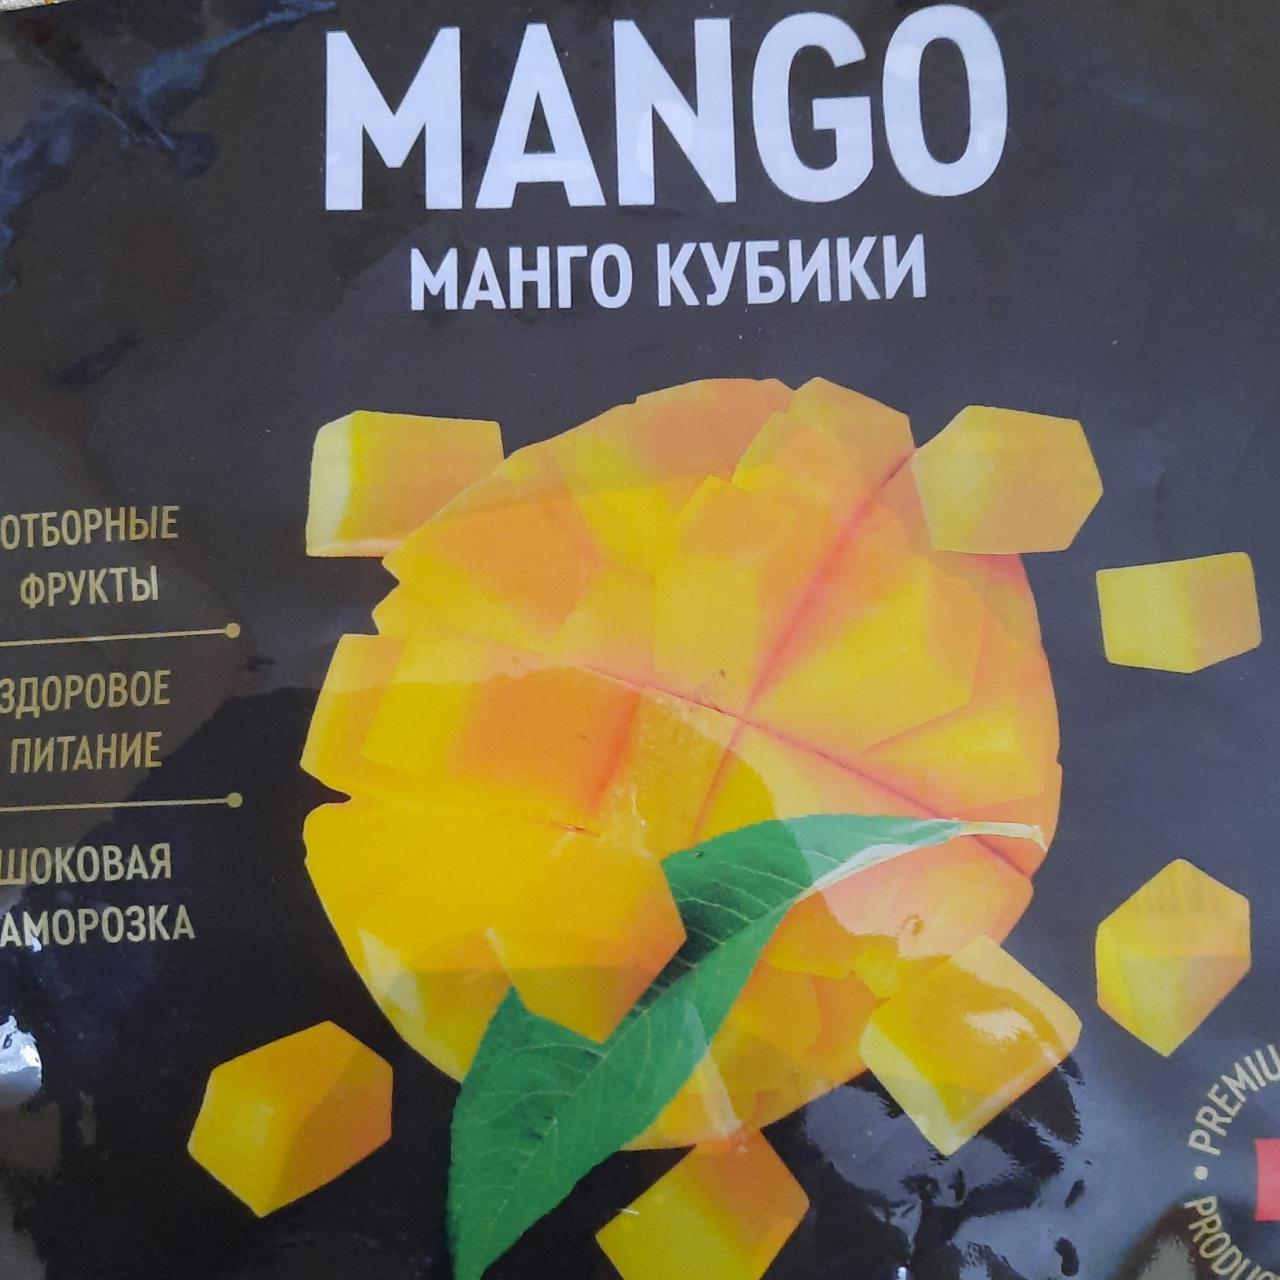 Фото - манго кубики замороженные Premiere of taste